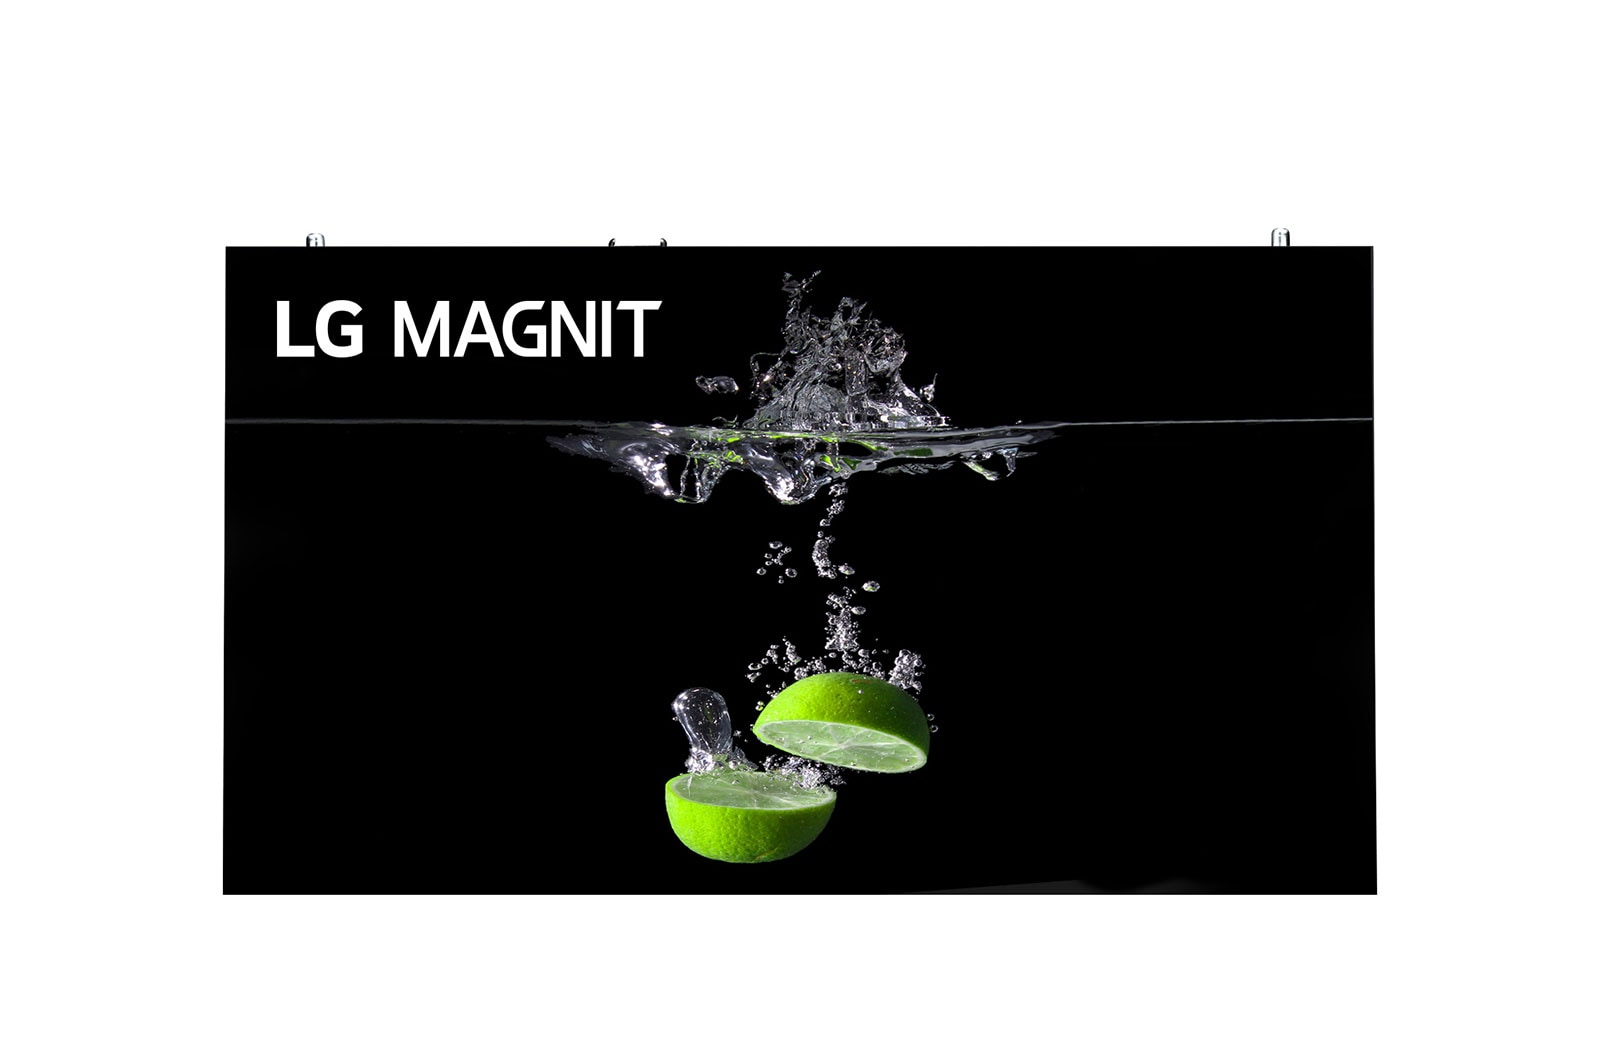 LG MAGNIT, LSAB009-S1